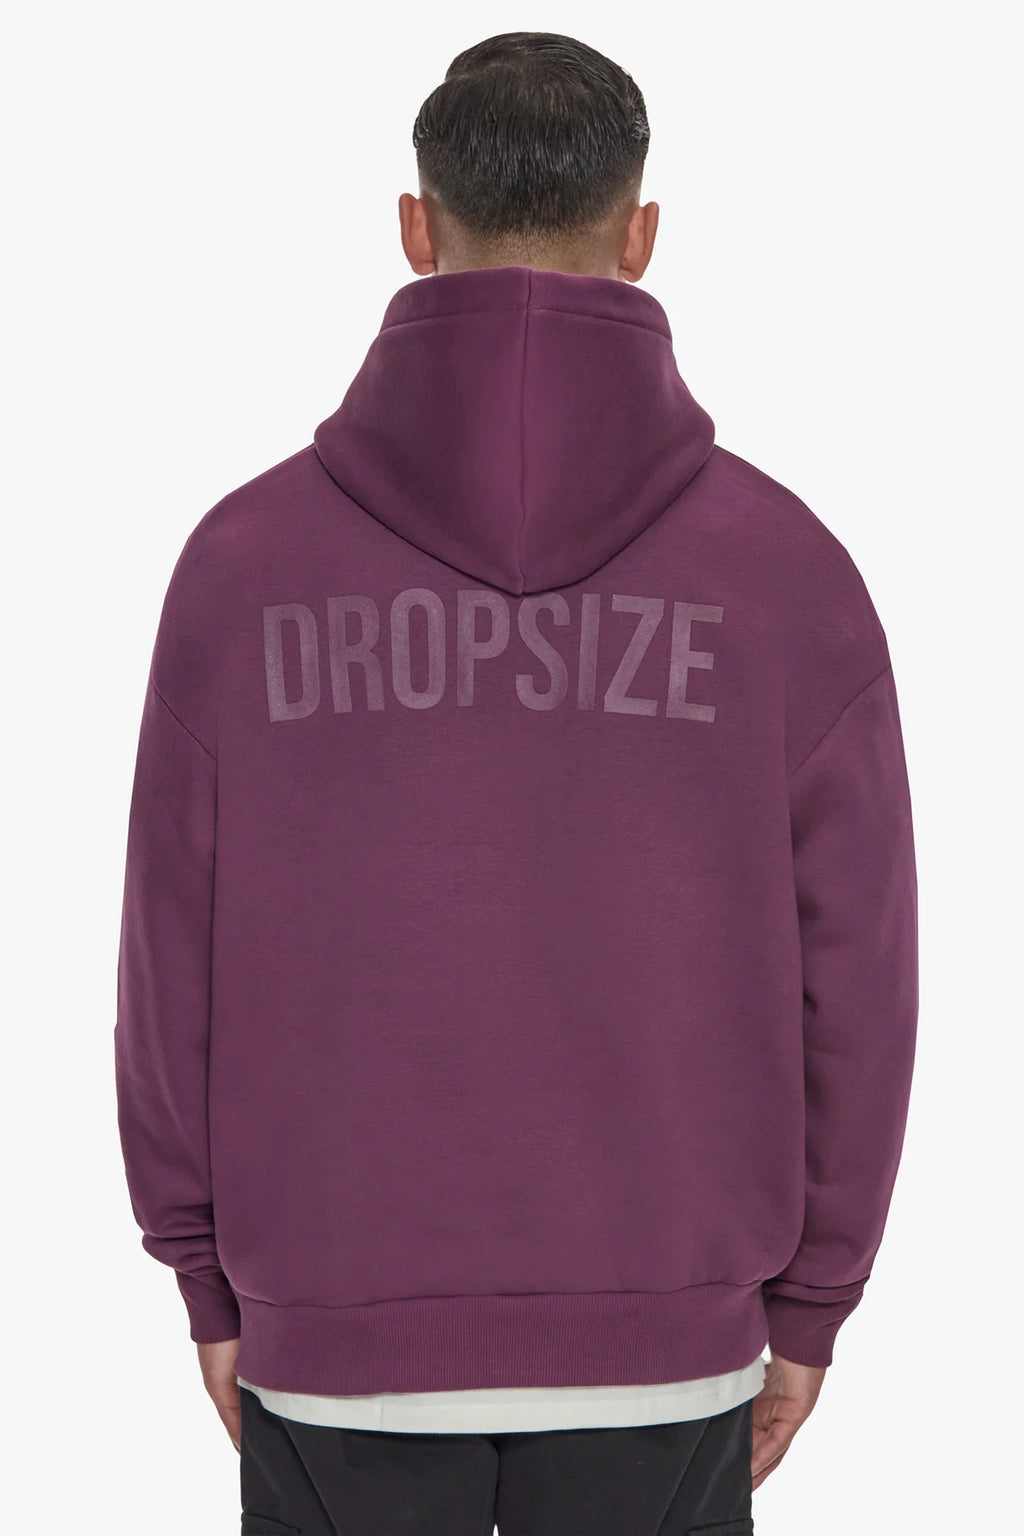 Dropsize Oversize HD Print Hoodie Grape